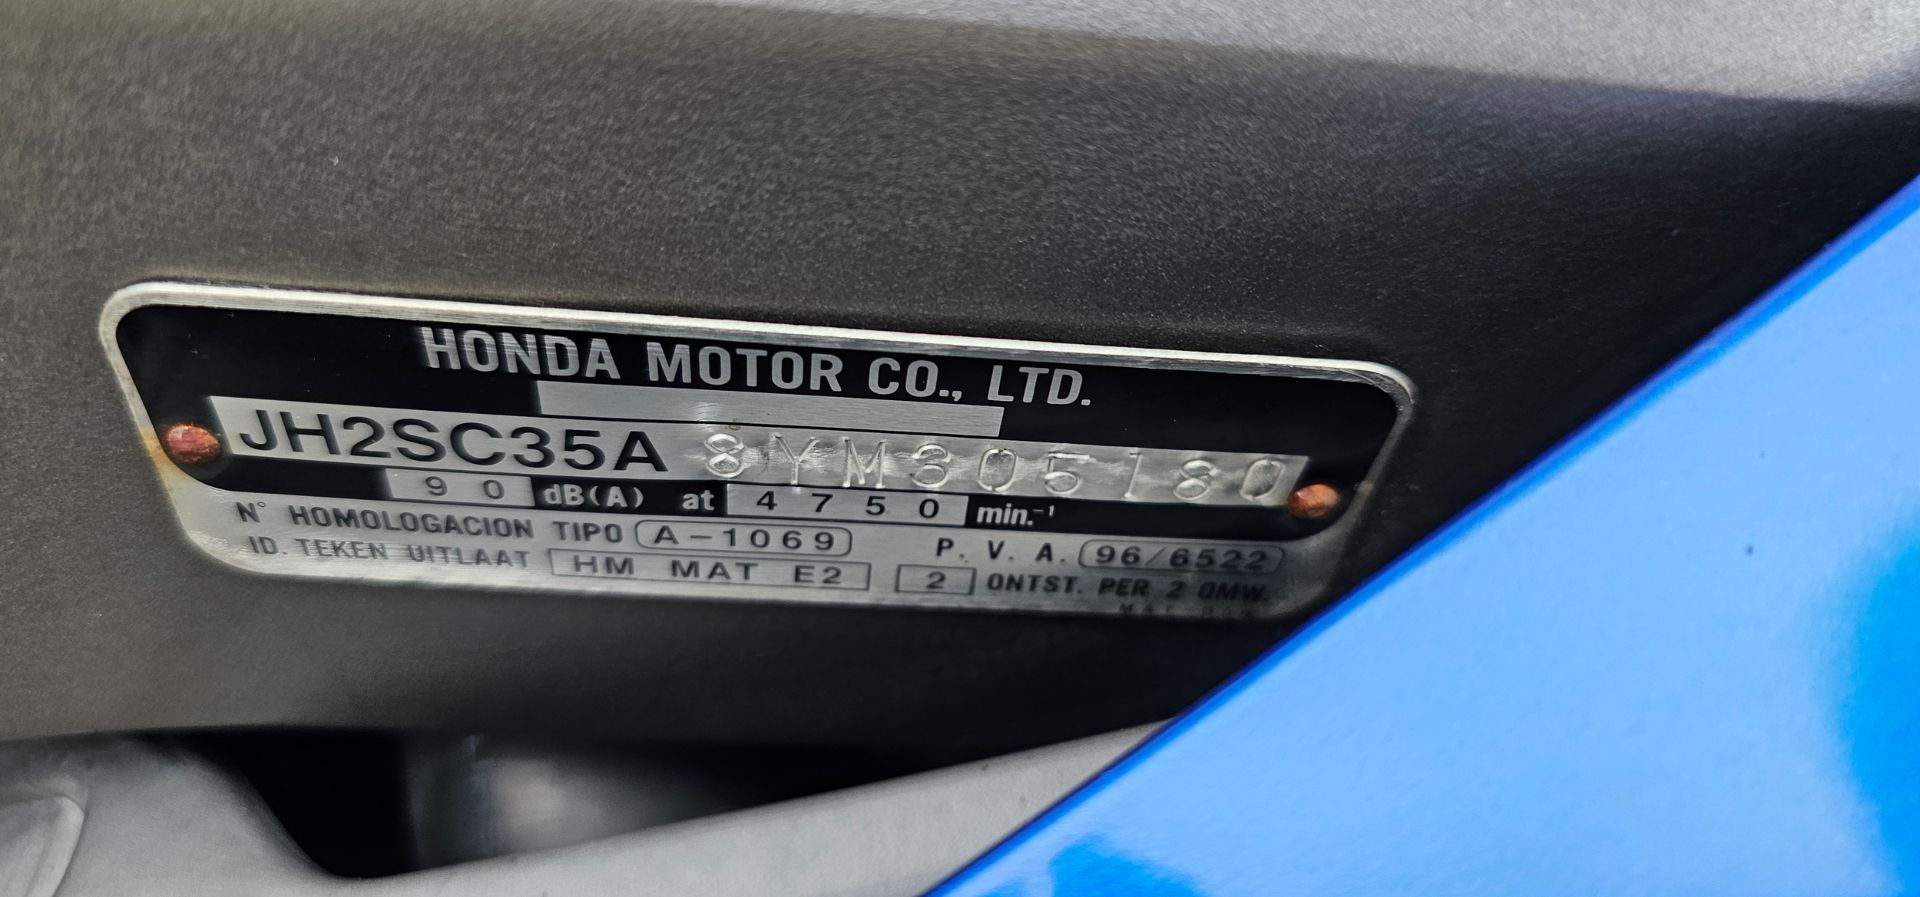 2001 Honda CBR 1100XX Blackbird. Registration number Y694 PWT. Frame number JH2SC35A8YM305180. - Bild 13 aus 15